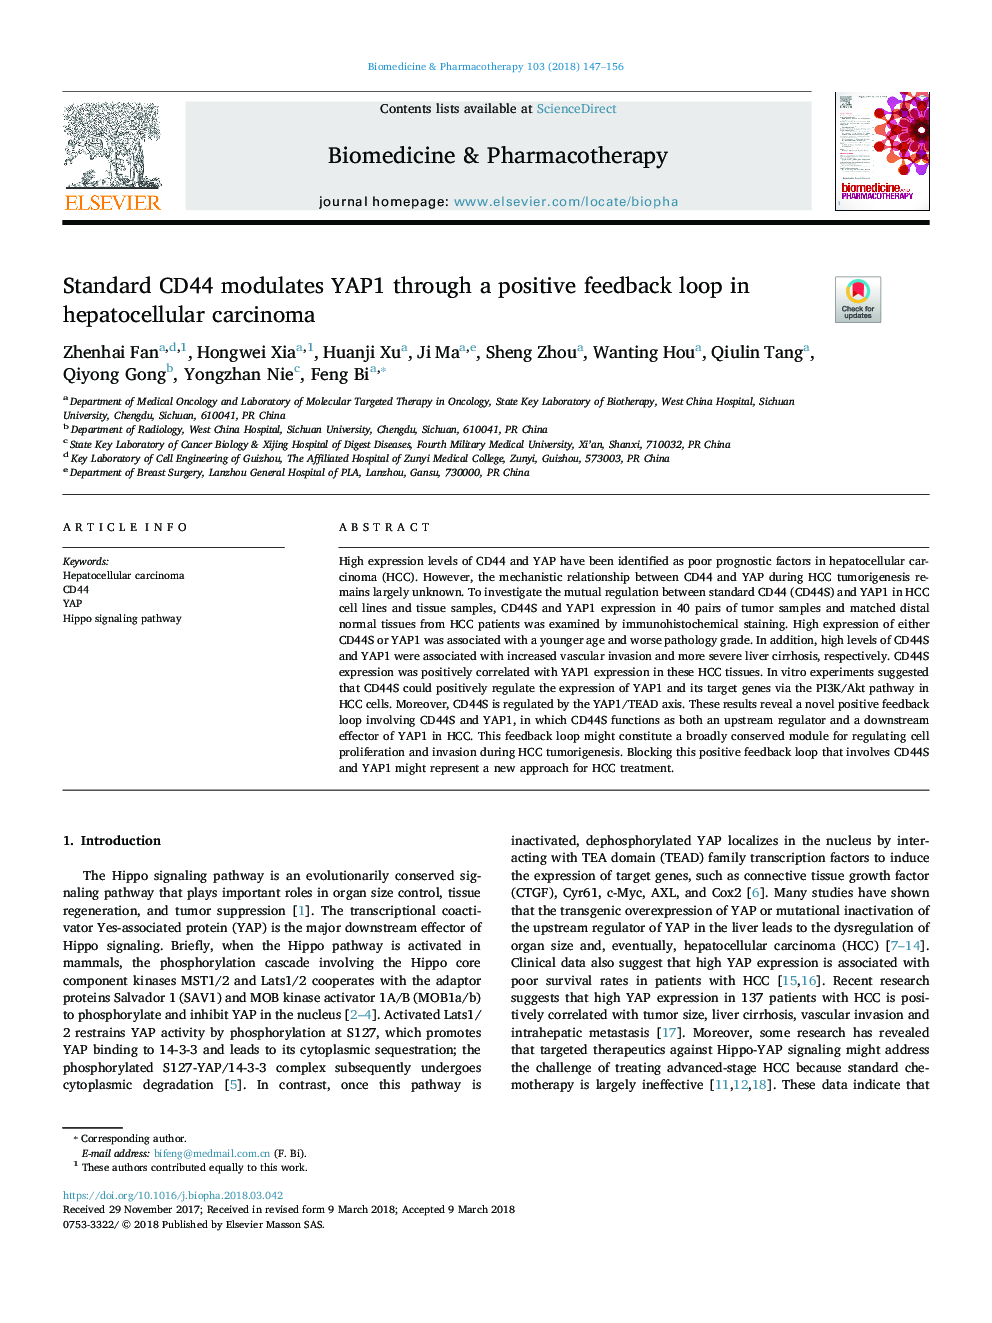 Standard CD44 modulates YAP1 through a positive feedback loop in hepatocellular carcinoma